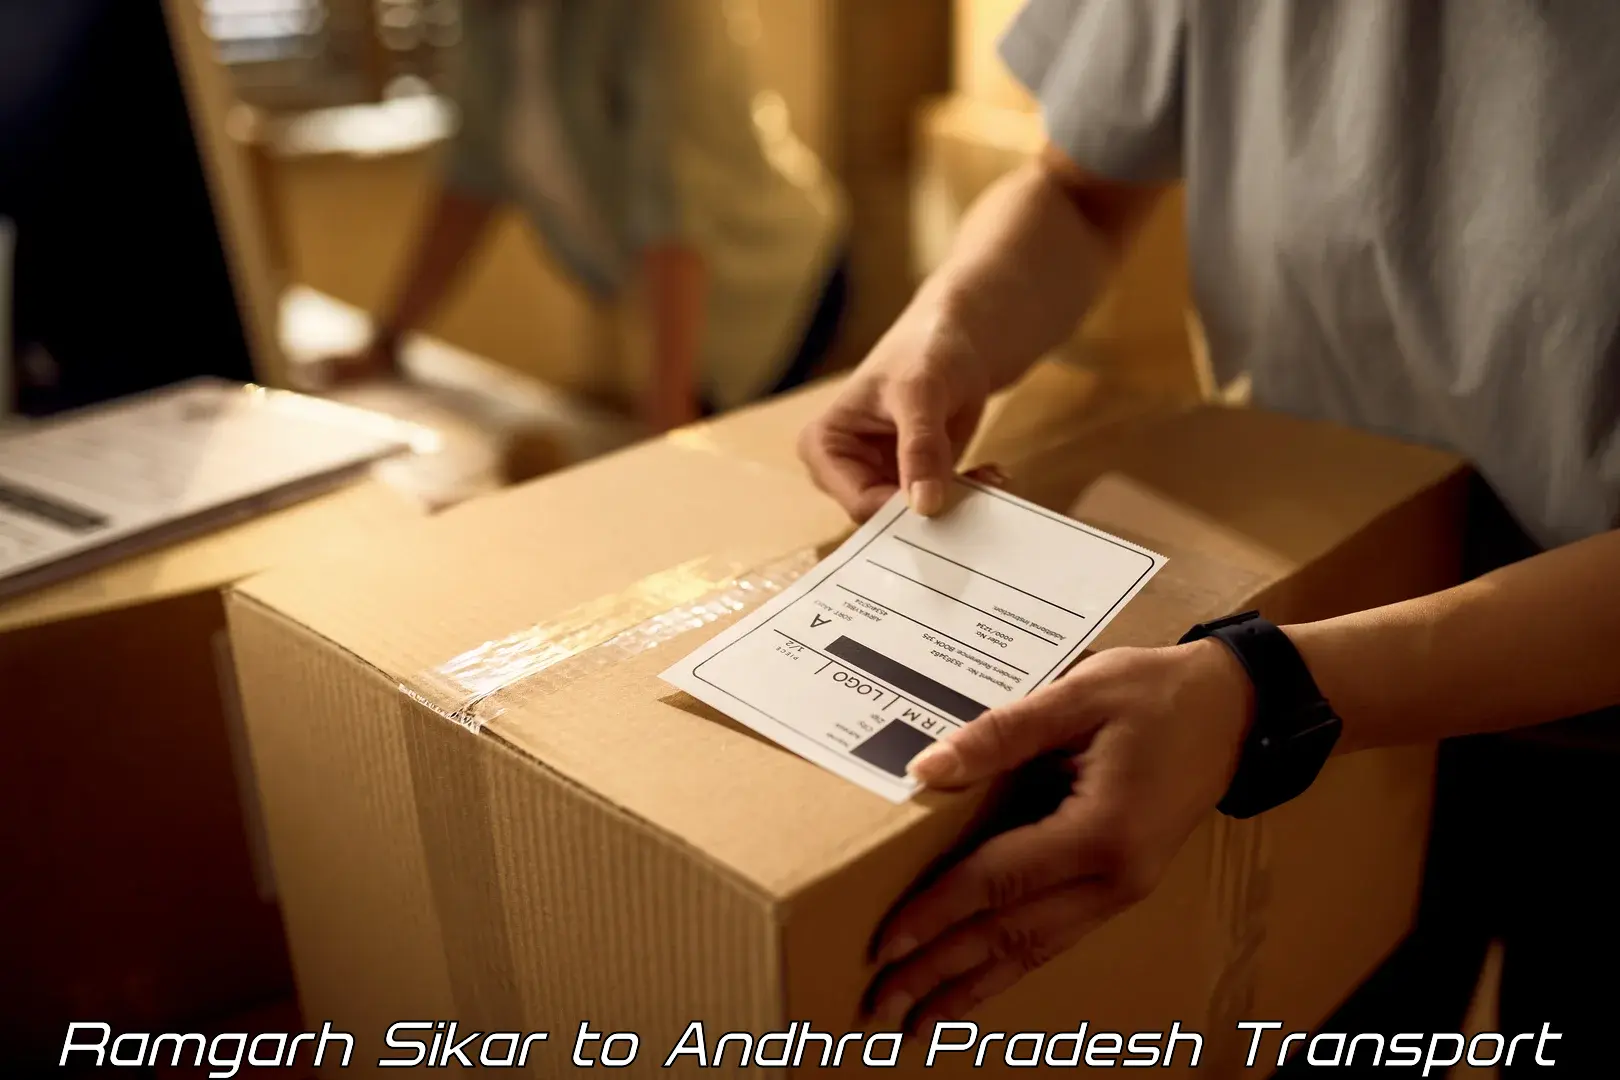 Goods delivery service Ramgarh Sikar to Devarapalli